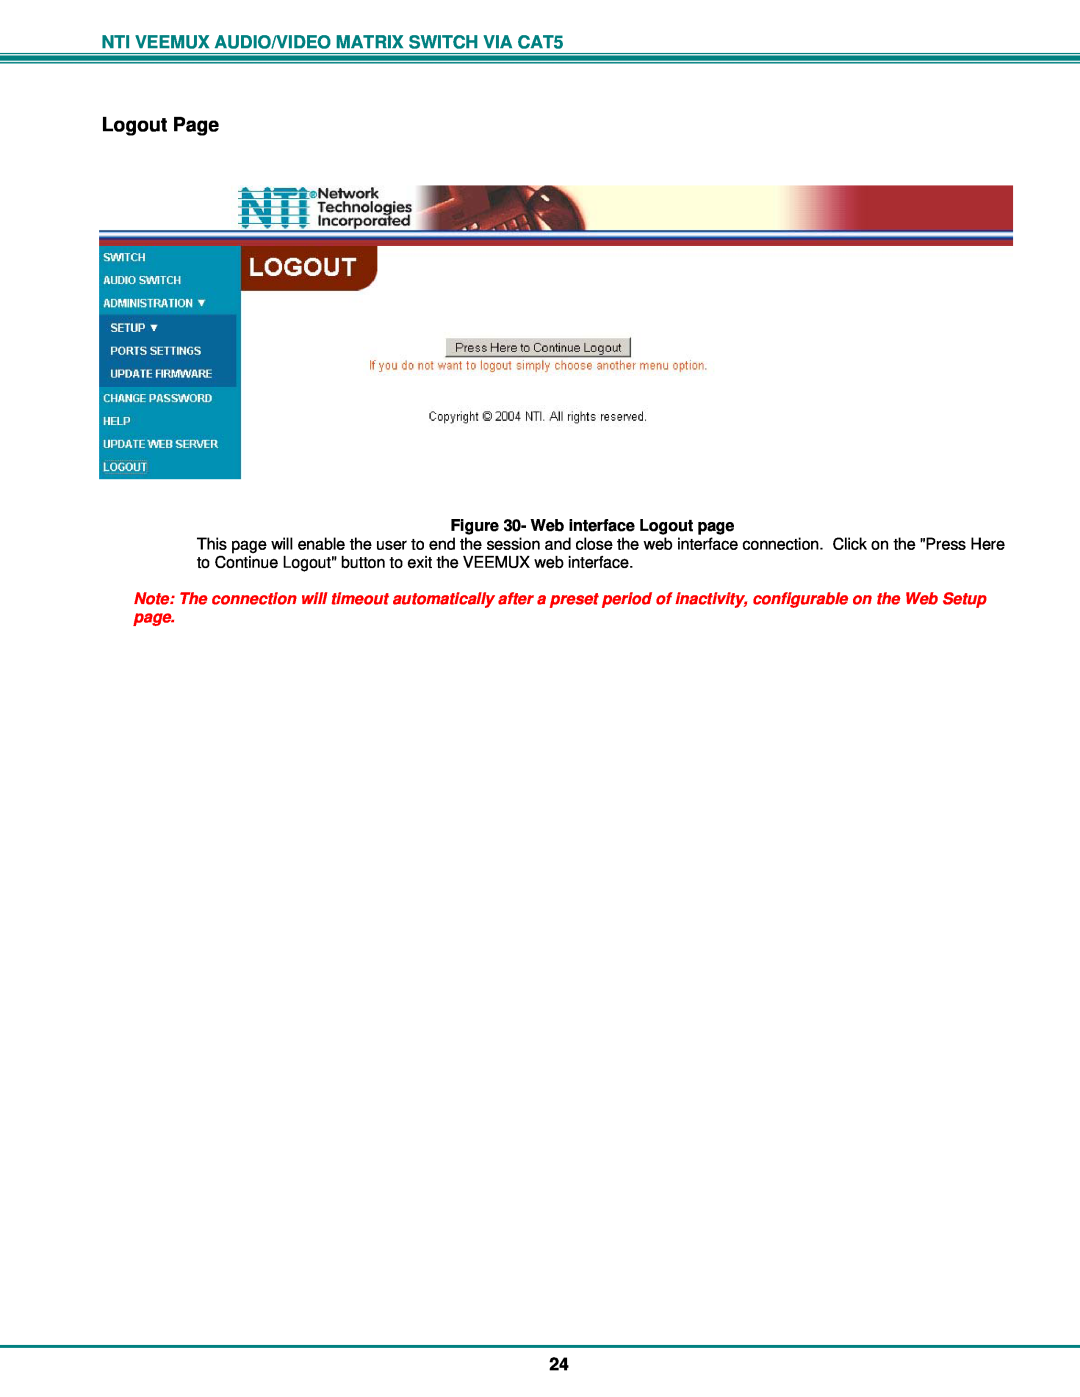 Network Technologies SM-nXm-C5AV-LCD Logout Page, NTI VEEMUX AUDIO/VIDEO MATRIX SWITCH VIA CAT5, Web interface Logout page 